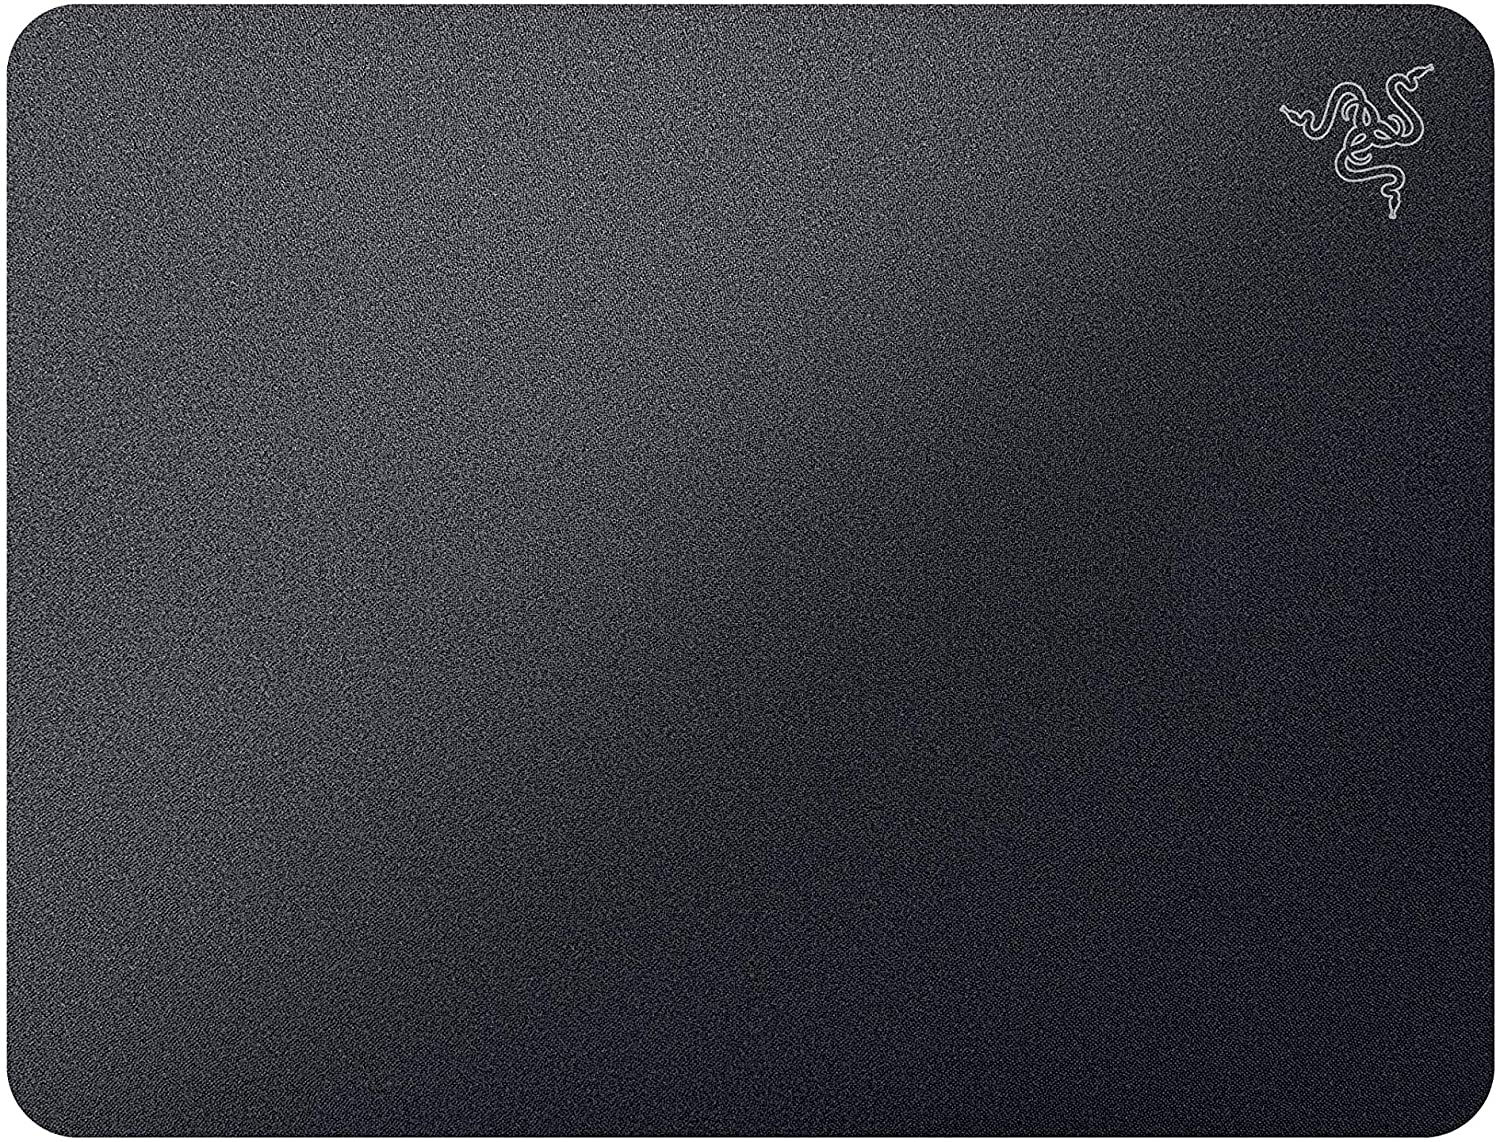 Razer Acari Gaming Mousepad Hard Maximum Speed & Glide 420x320x2mm Black